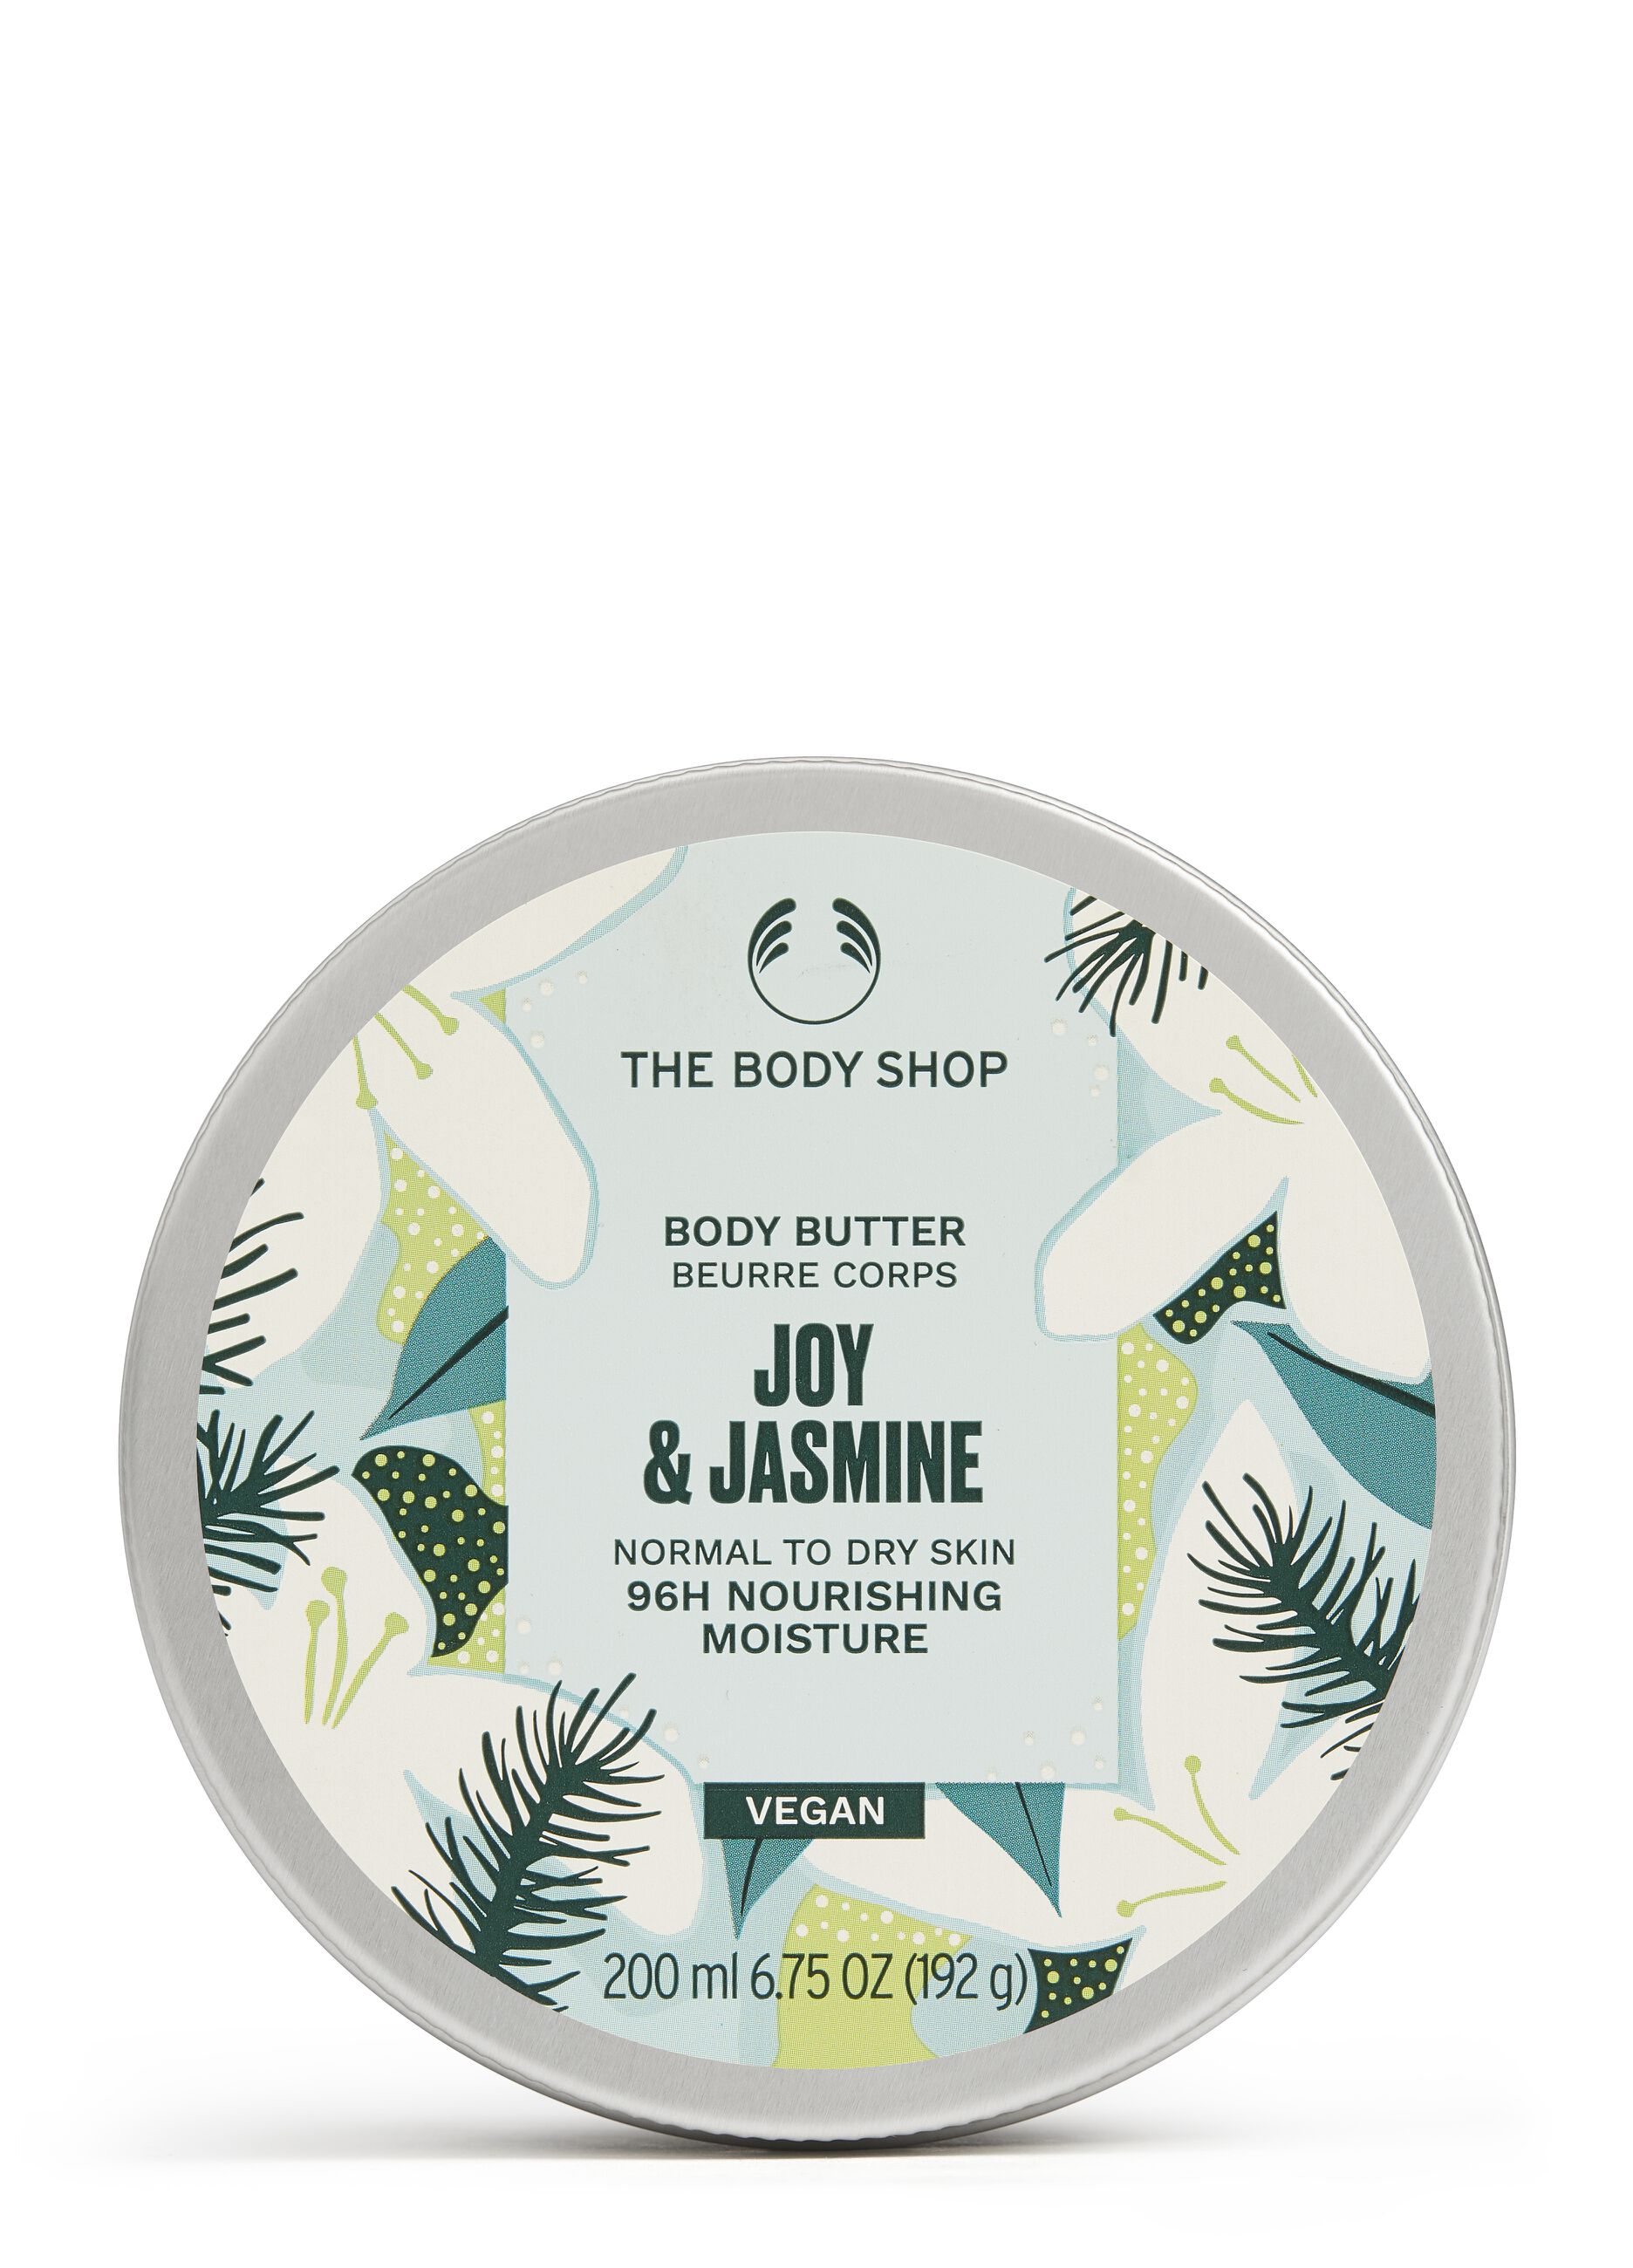 The Body Shop Joy & Jasmine body butter 200ml